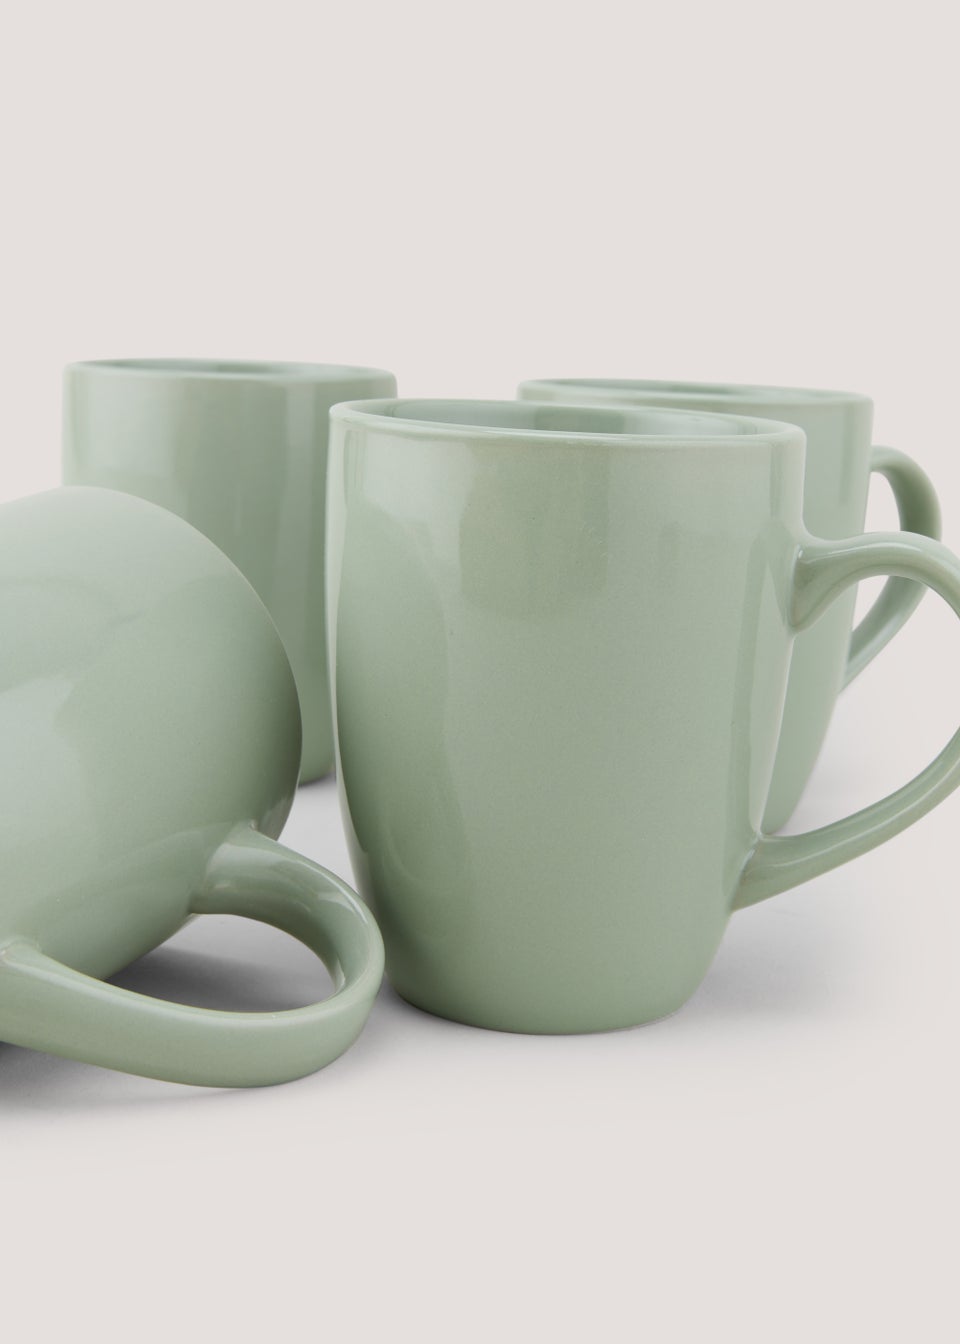 4 Pack Green Mugs (10cm x 8cm)